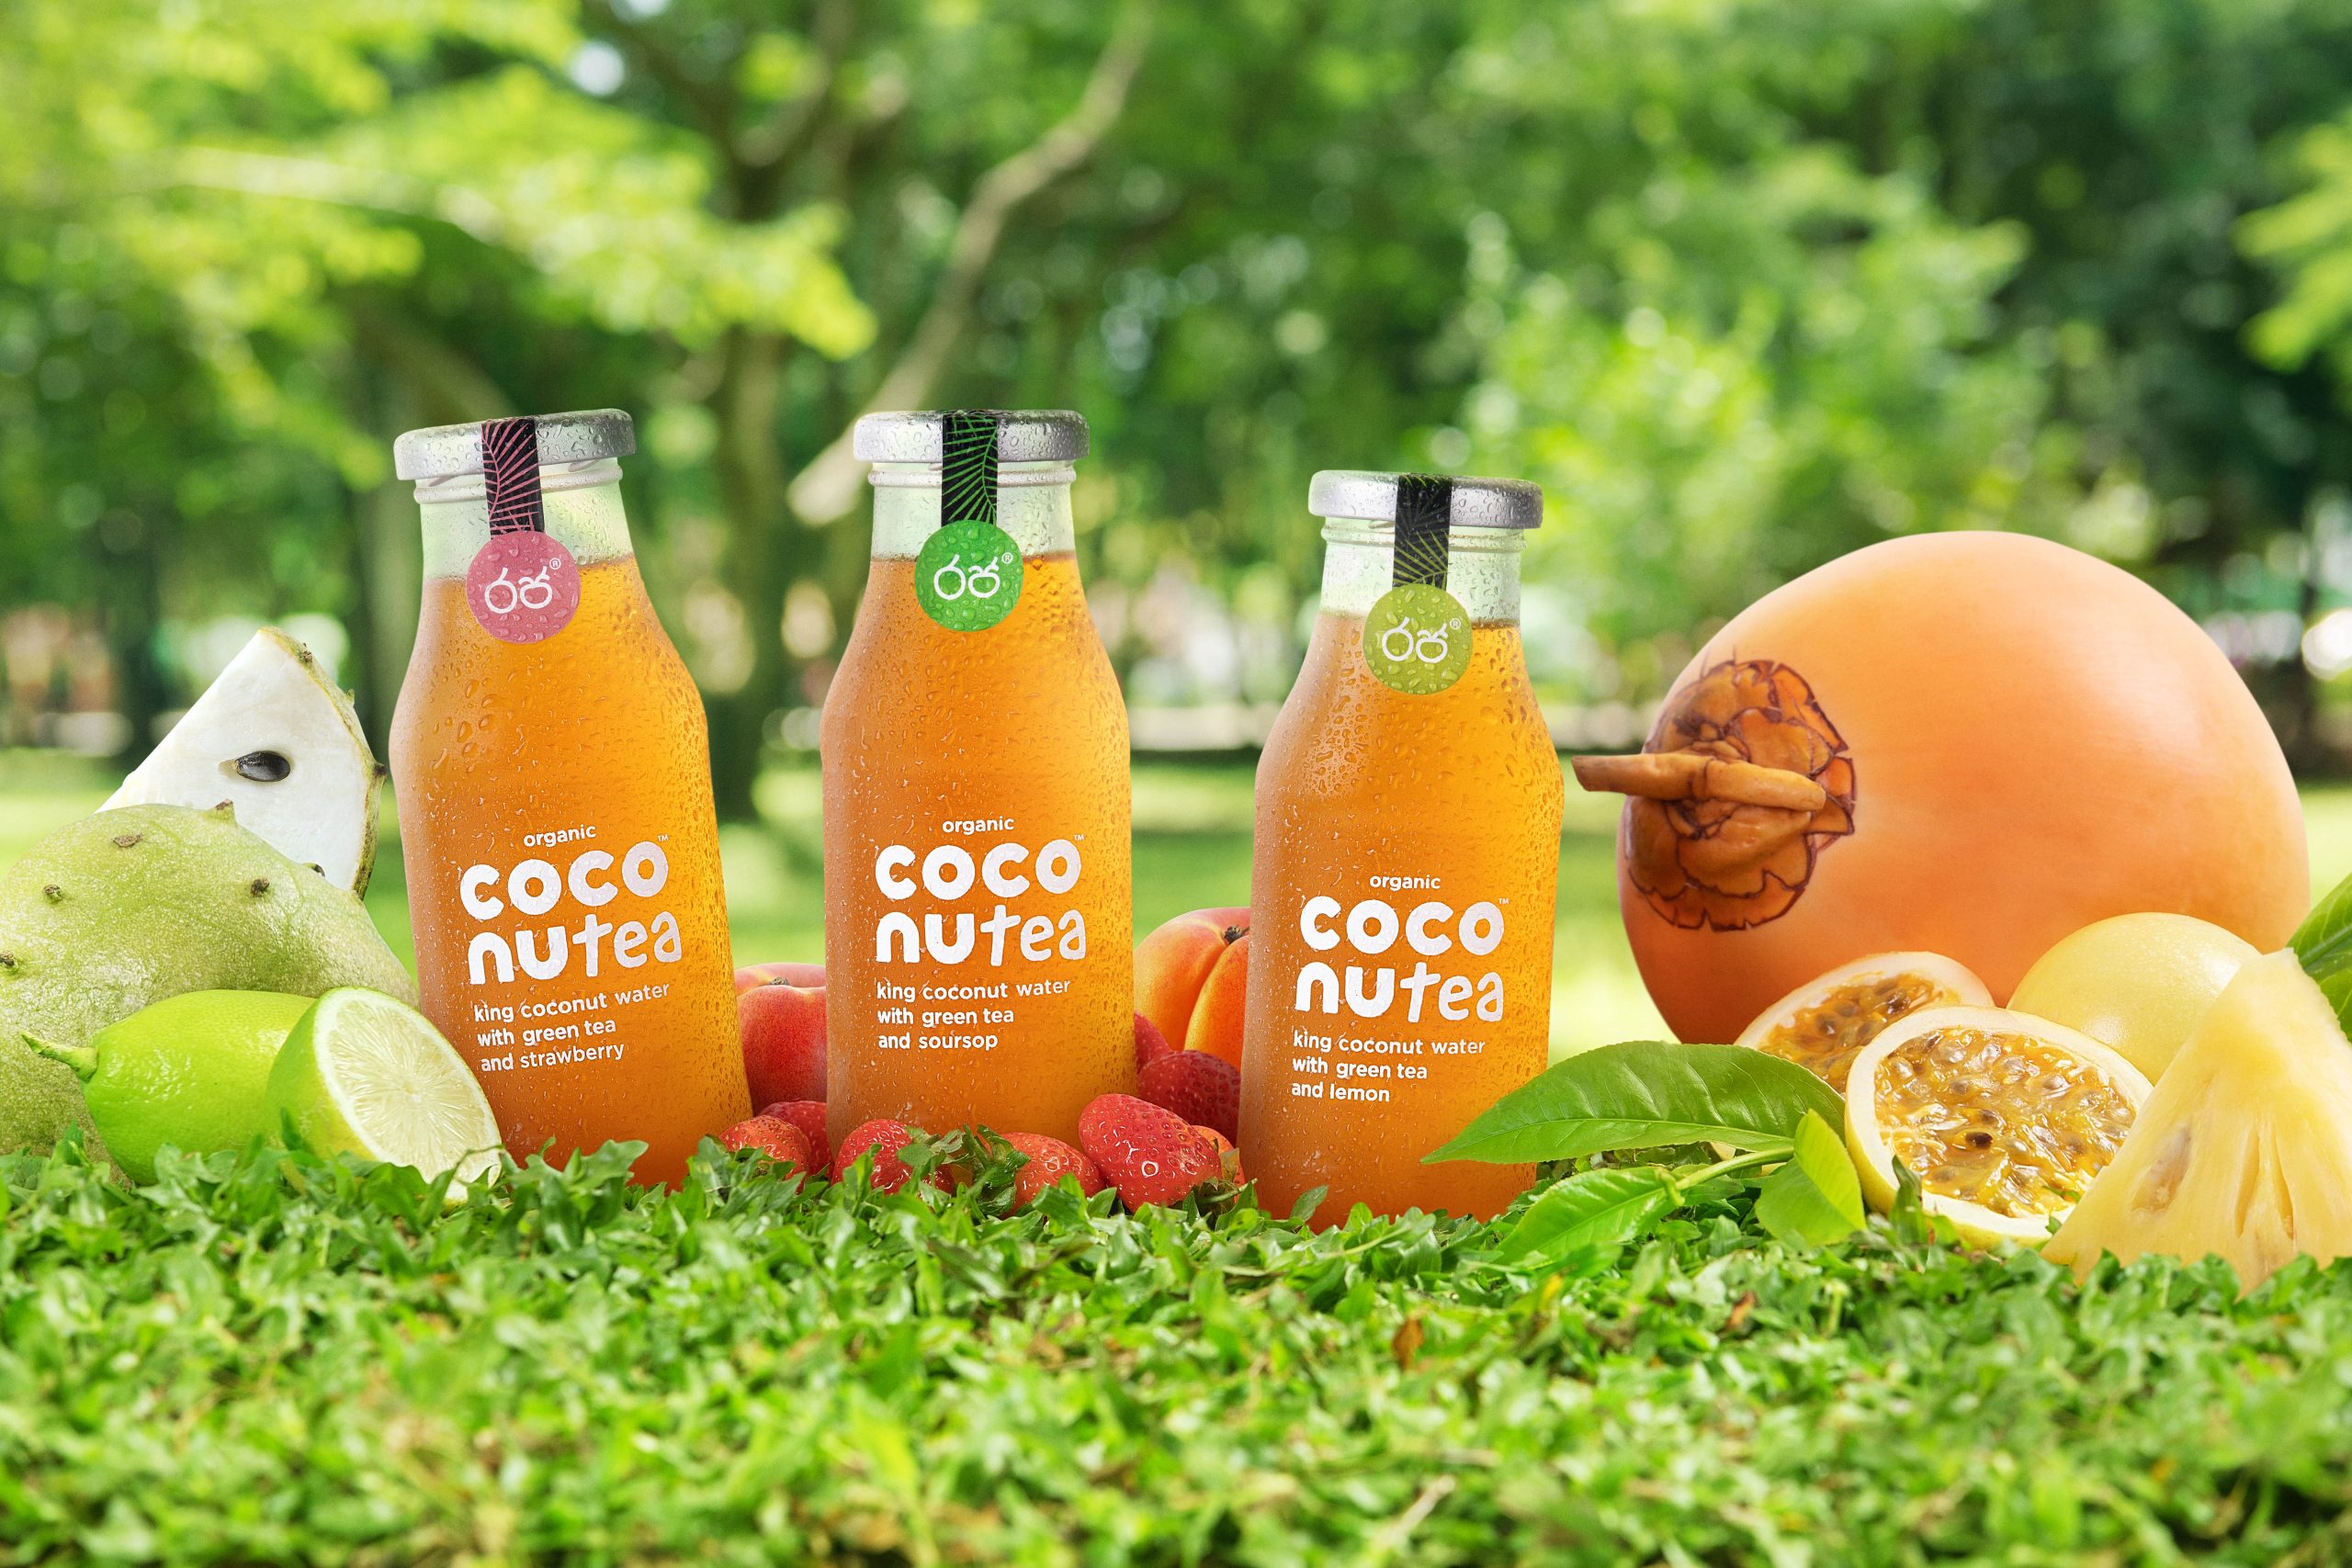 Coconutea launches organic King Coconut Water and Premium Green Tea